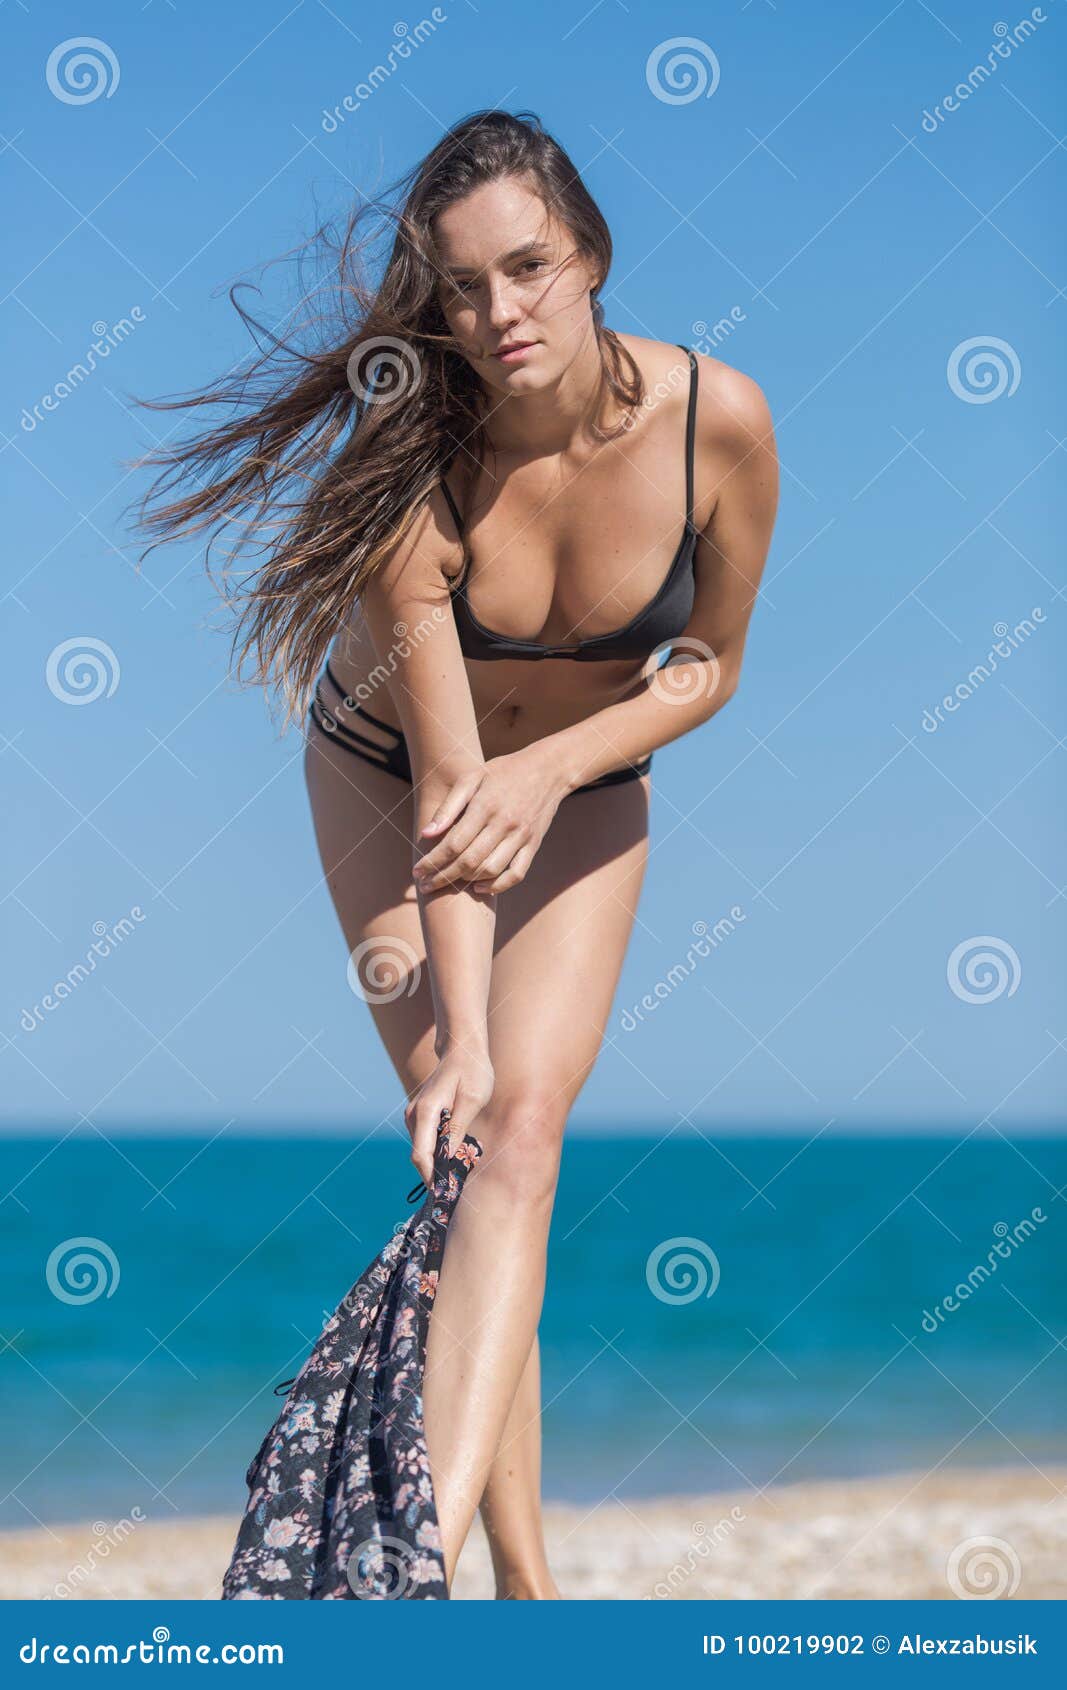 girls undressing beach voyeur Sex Images Hq